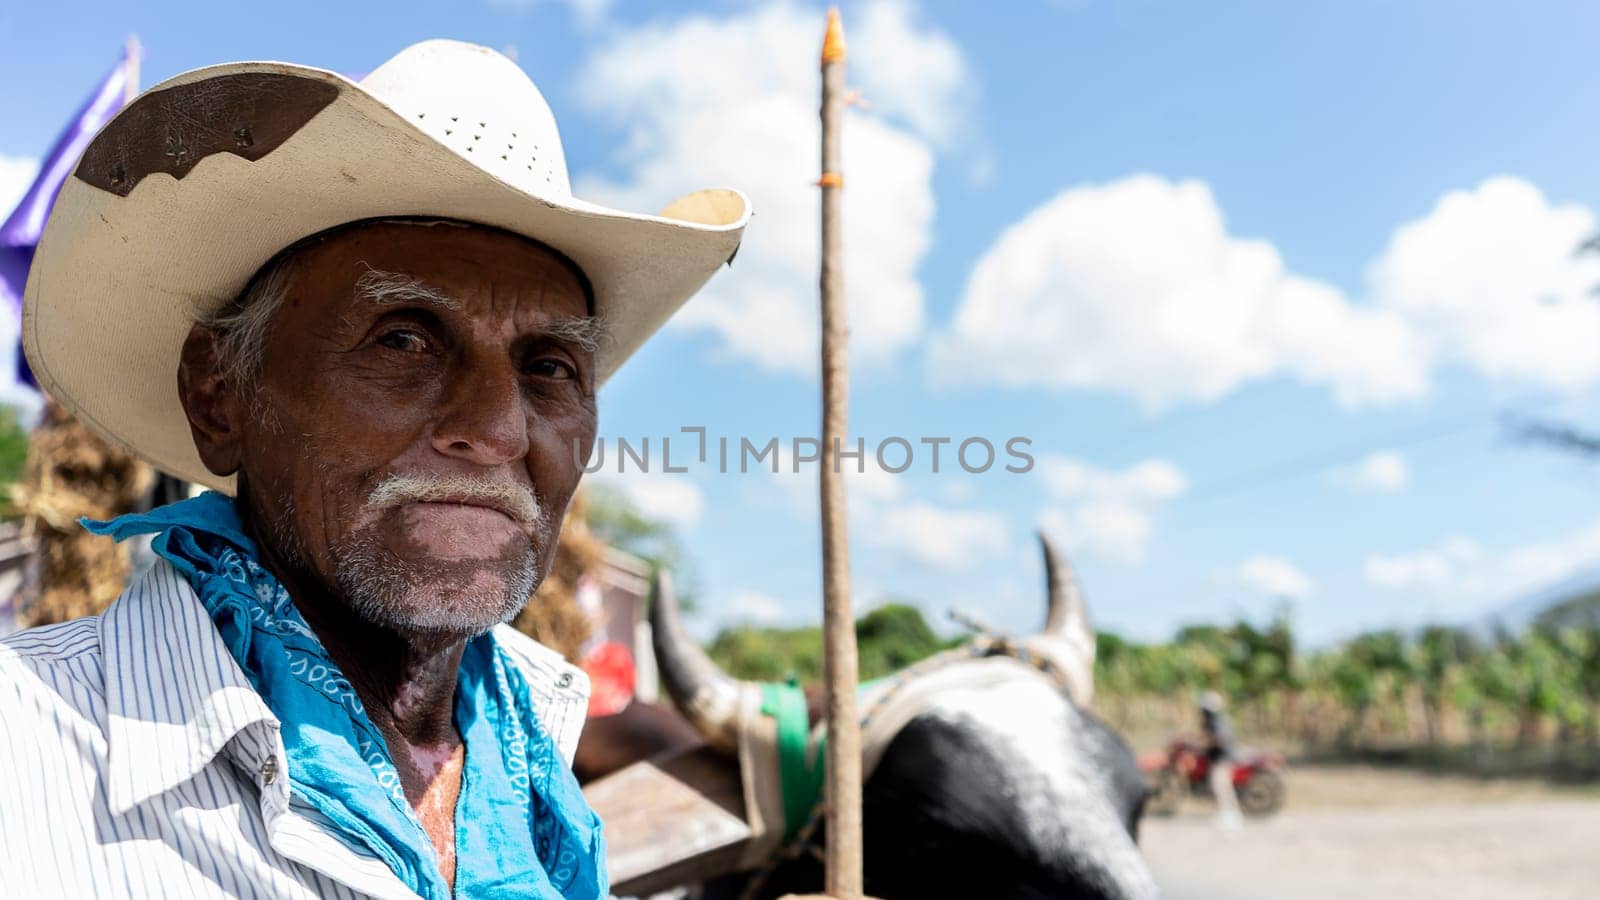 Closeup to the face of a Latino farmer with vitiligo who carries a rod to steer oxcarts by cfalvarez